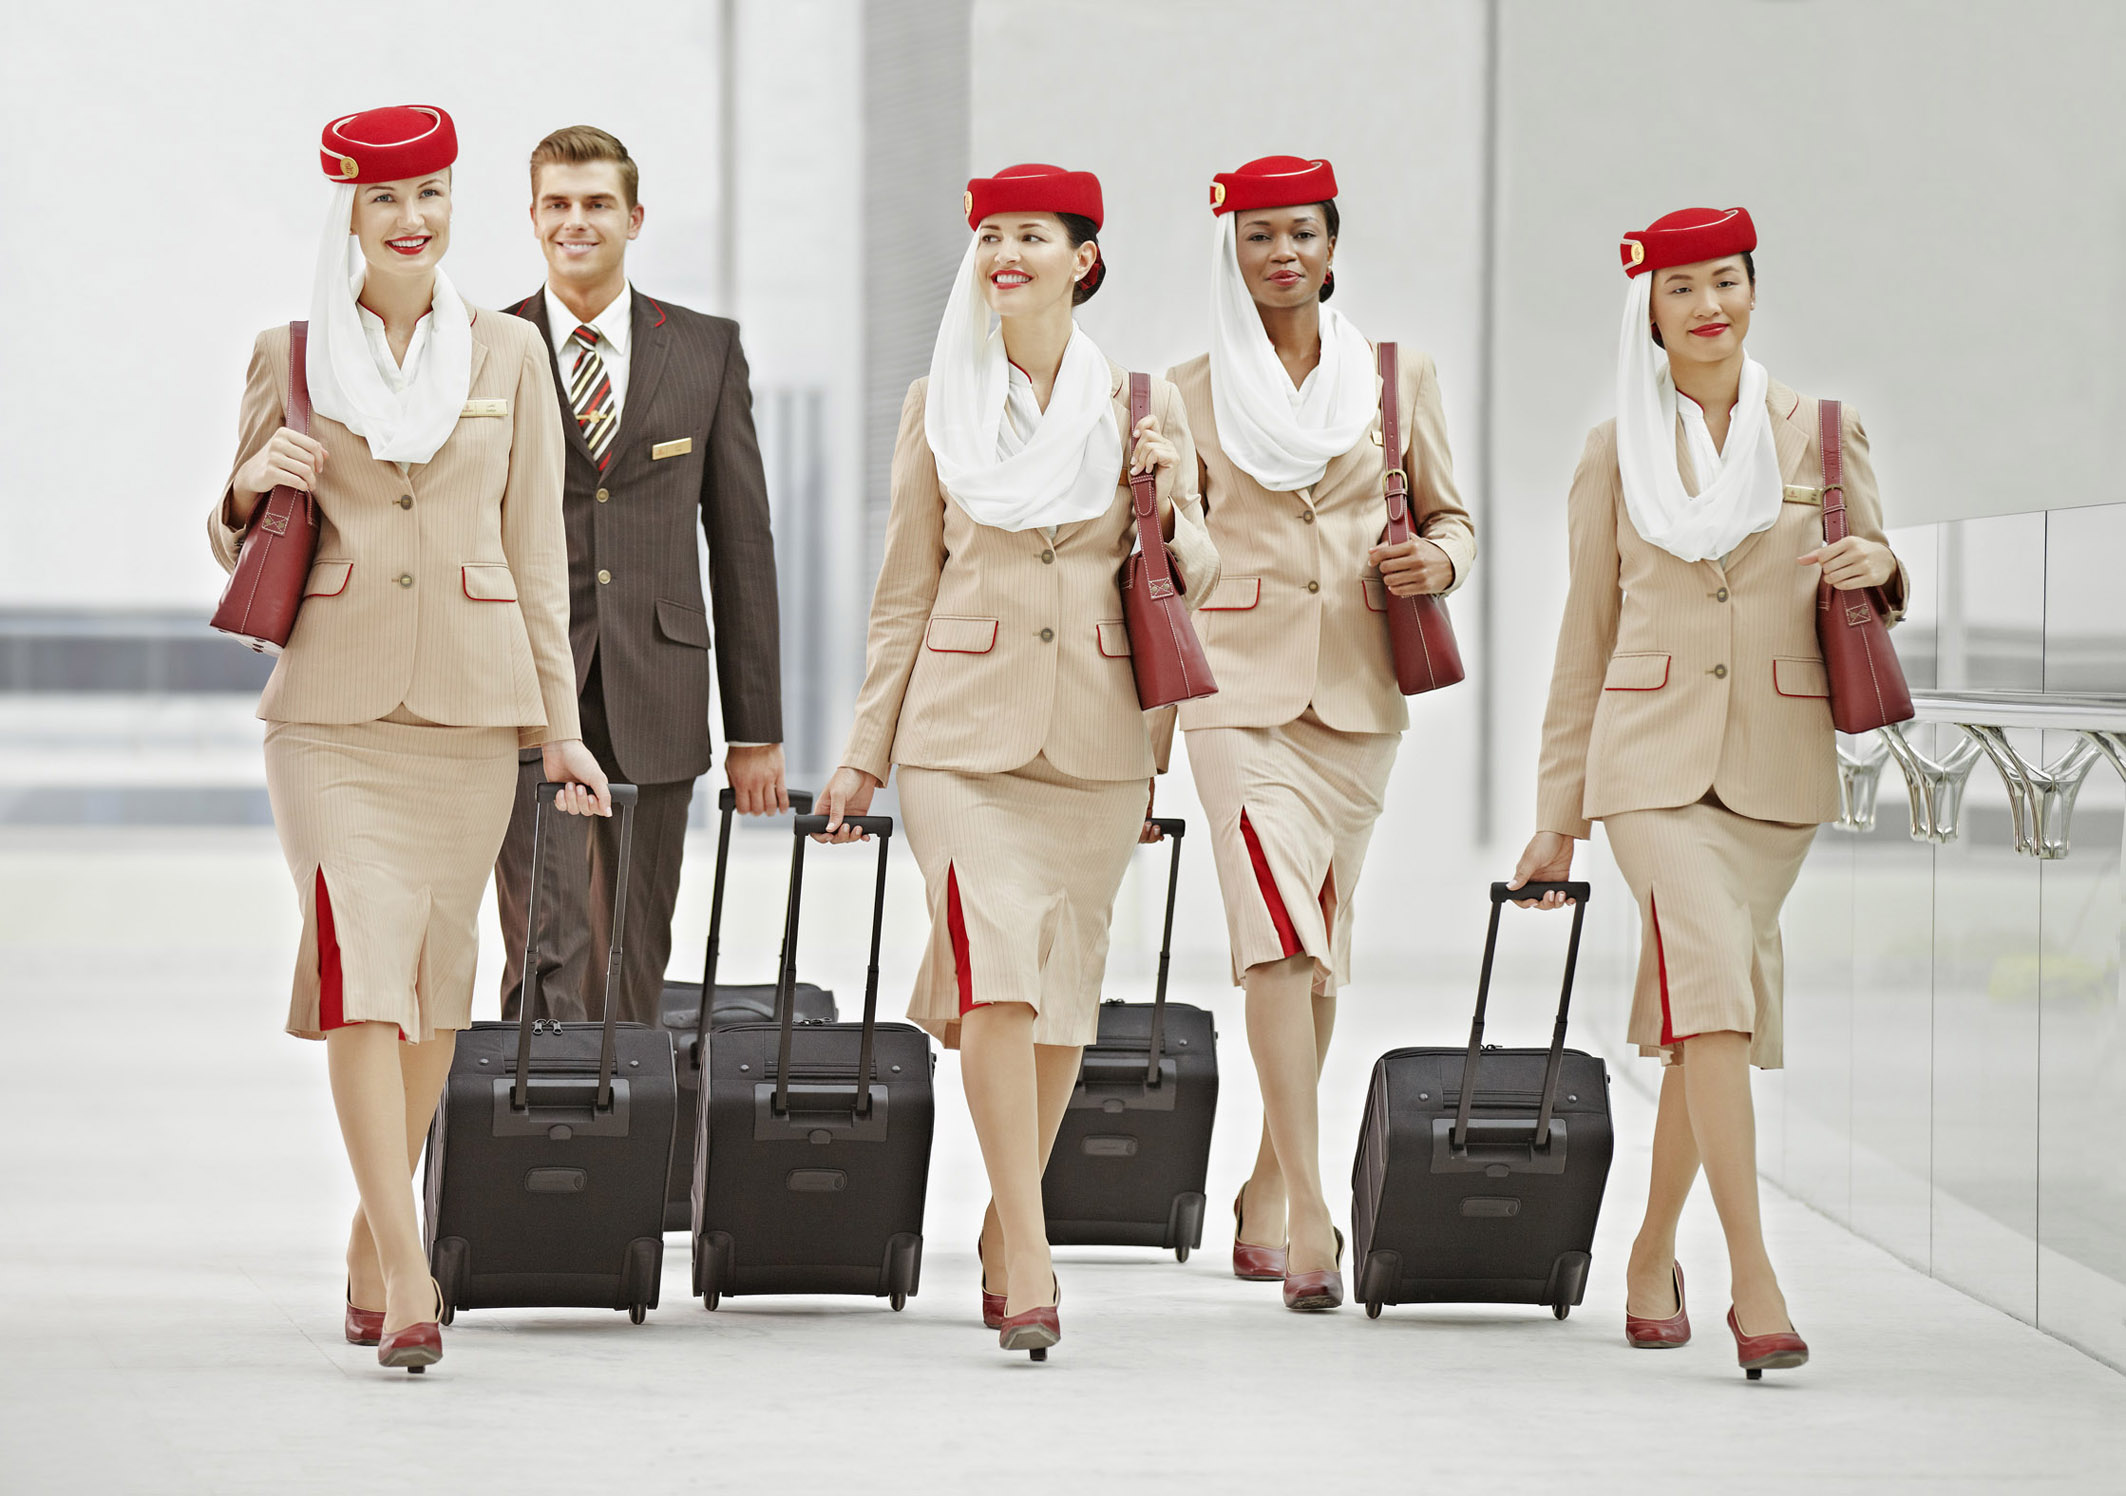 Emirates busca tripulantes de cabina en España por 2.300€ mes | Noticias Aerolíneas, Noticias de rss2 | Revista de turismo Preferente.com